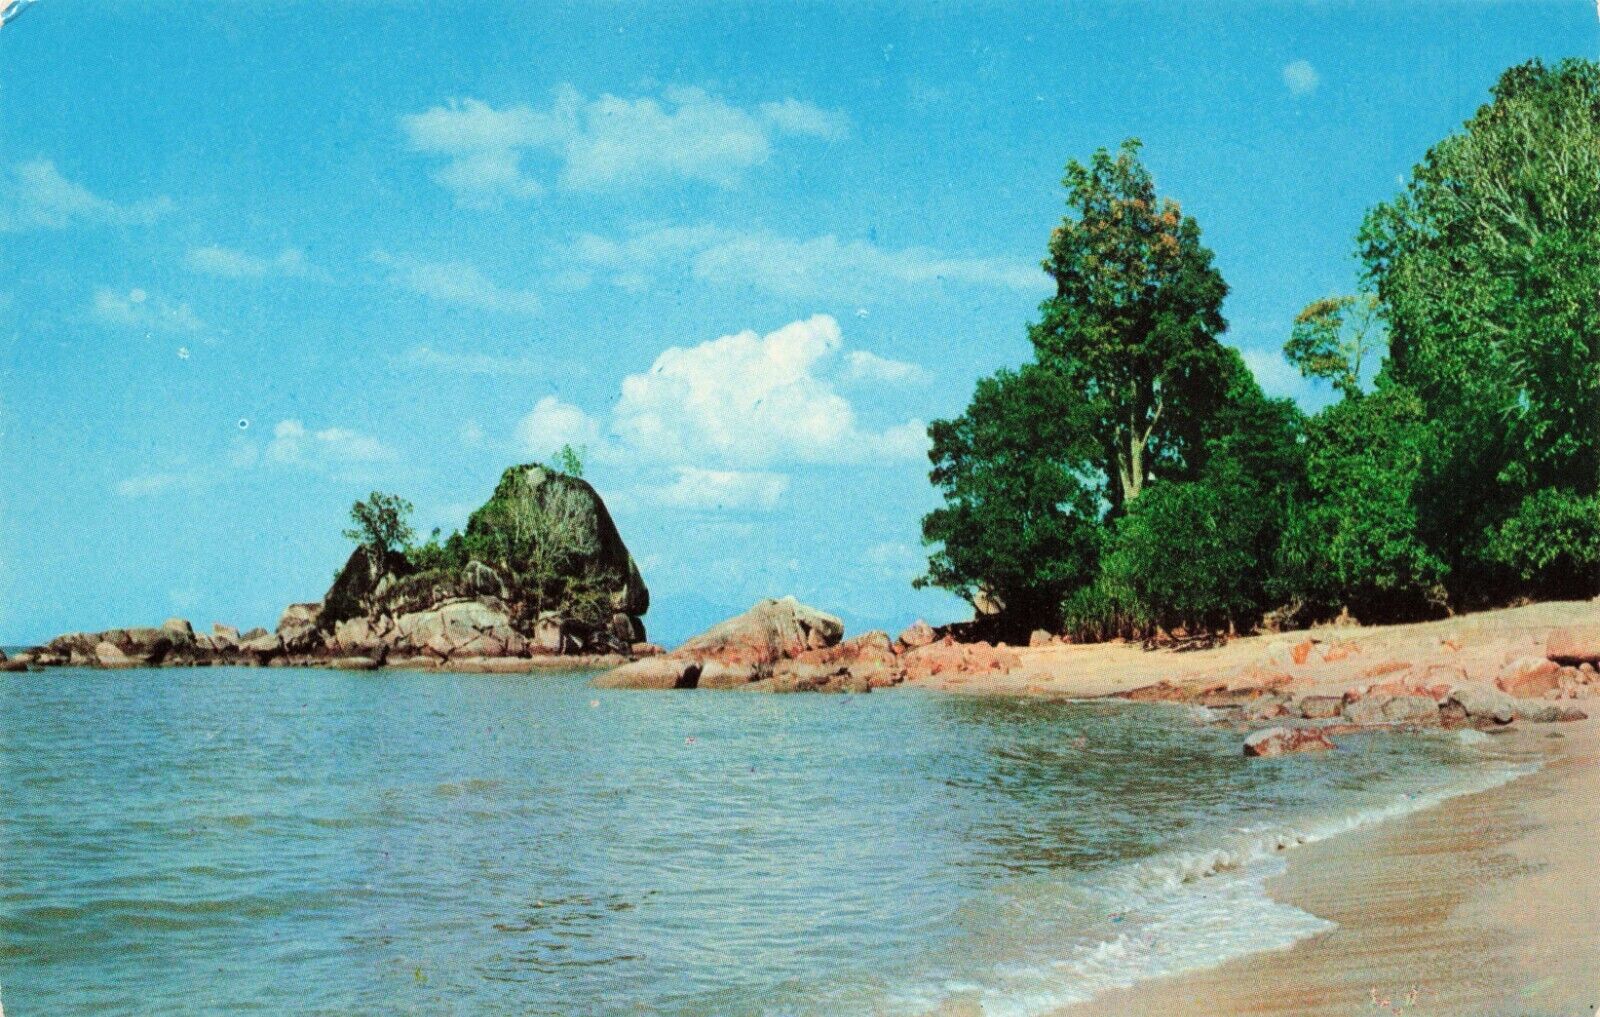 Lovers Isle, Batu Ferringhi, Penang, Malaysia Vintage Chrome PC